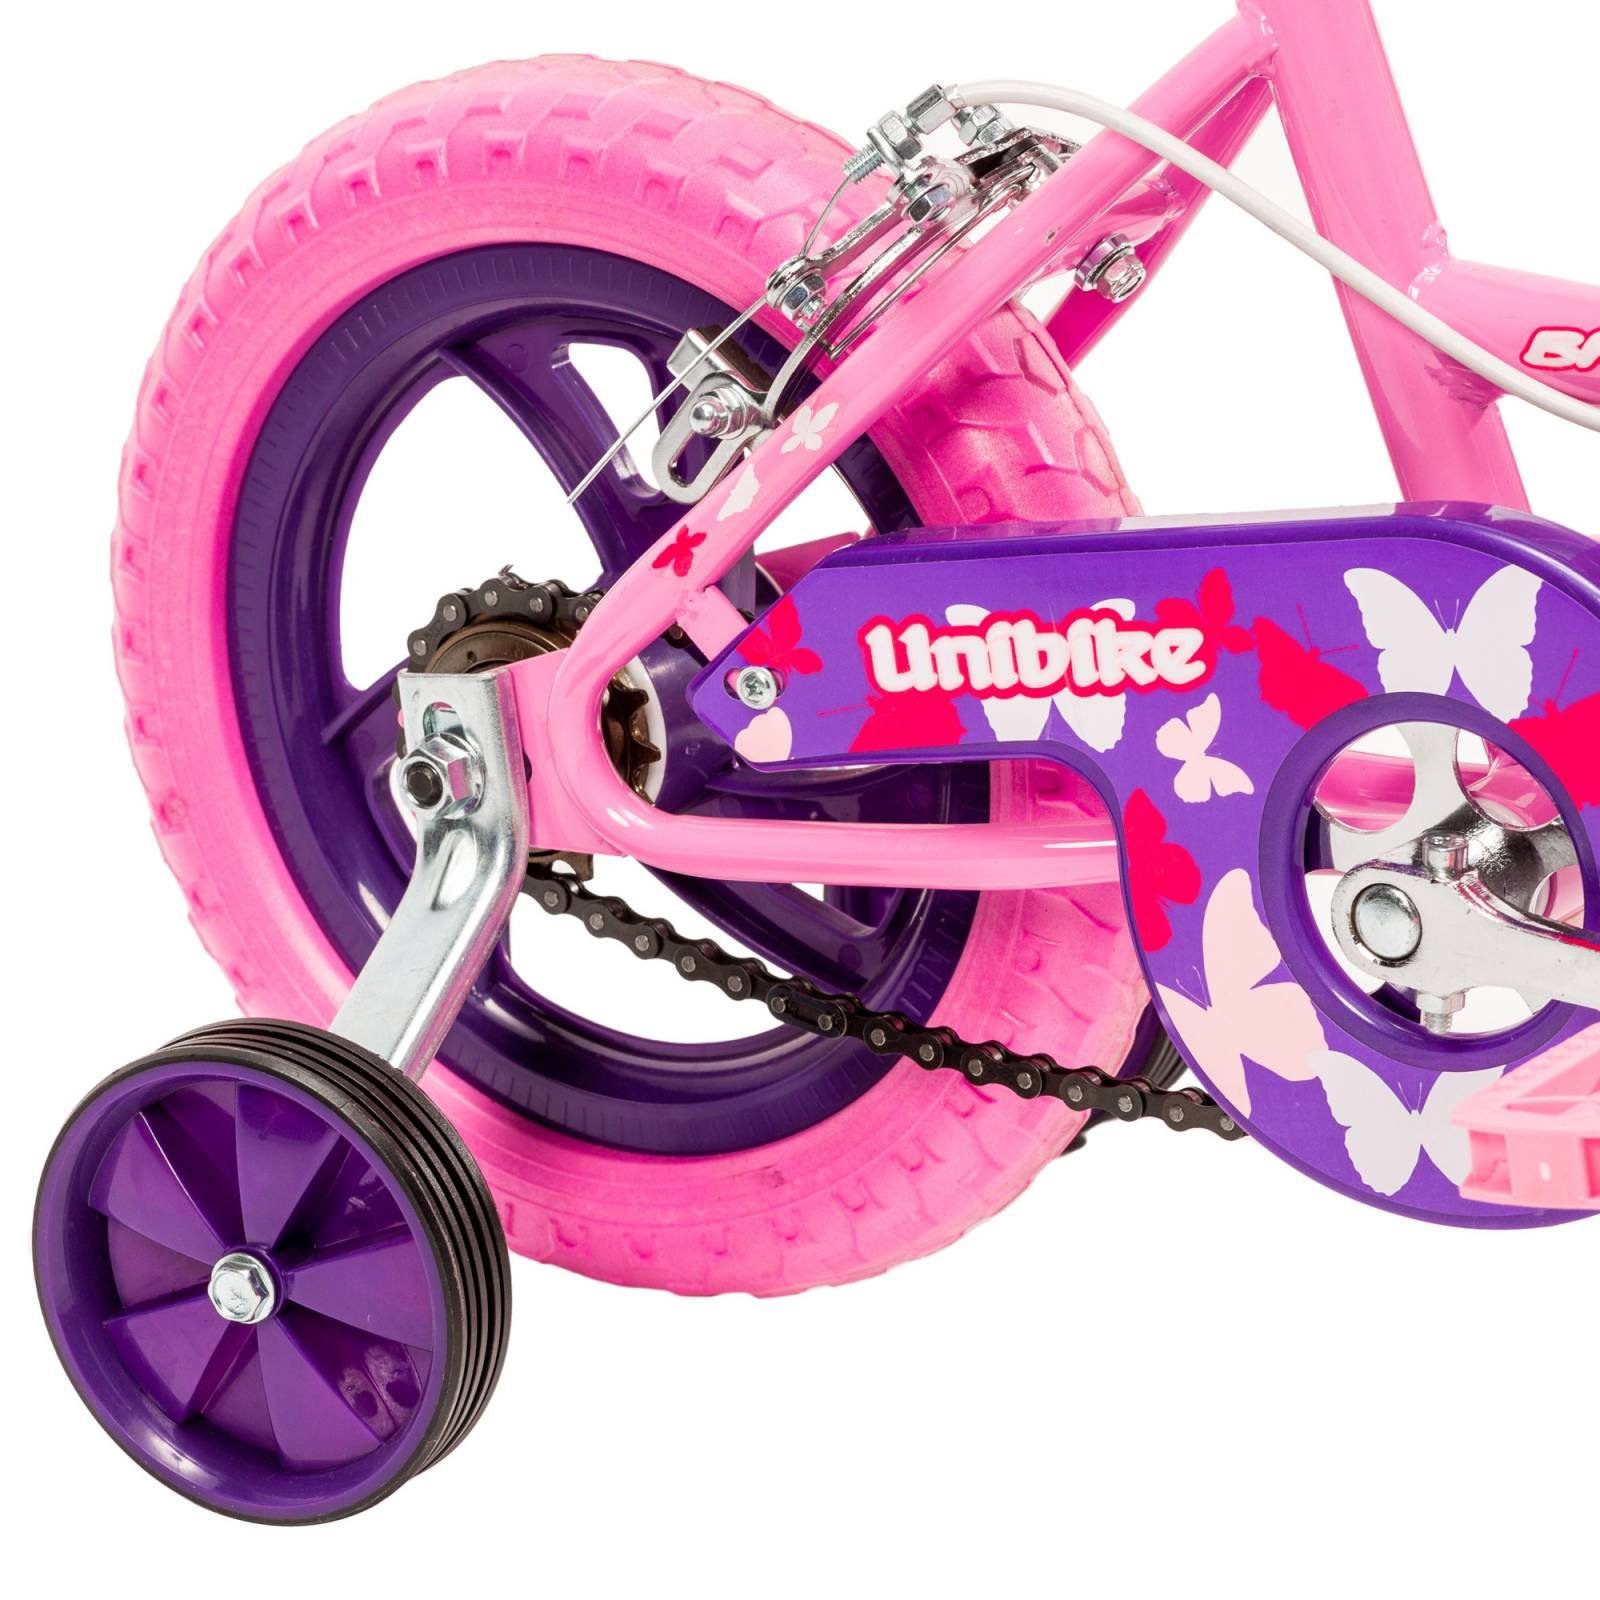 Guantes Bicicleta Rosa Salmón Roda - Tienda Eco Bebé